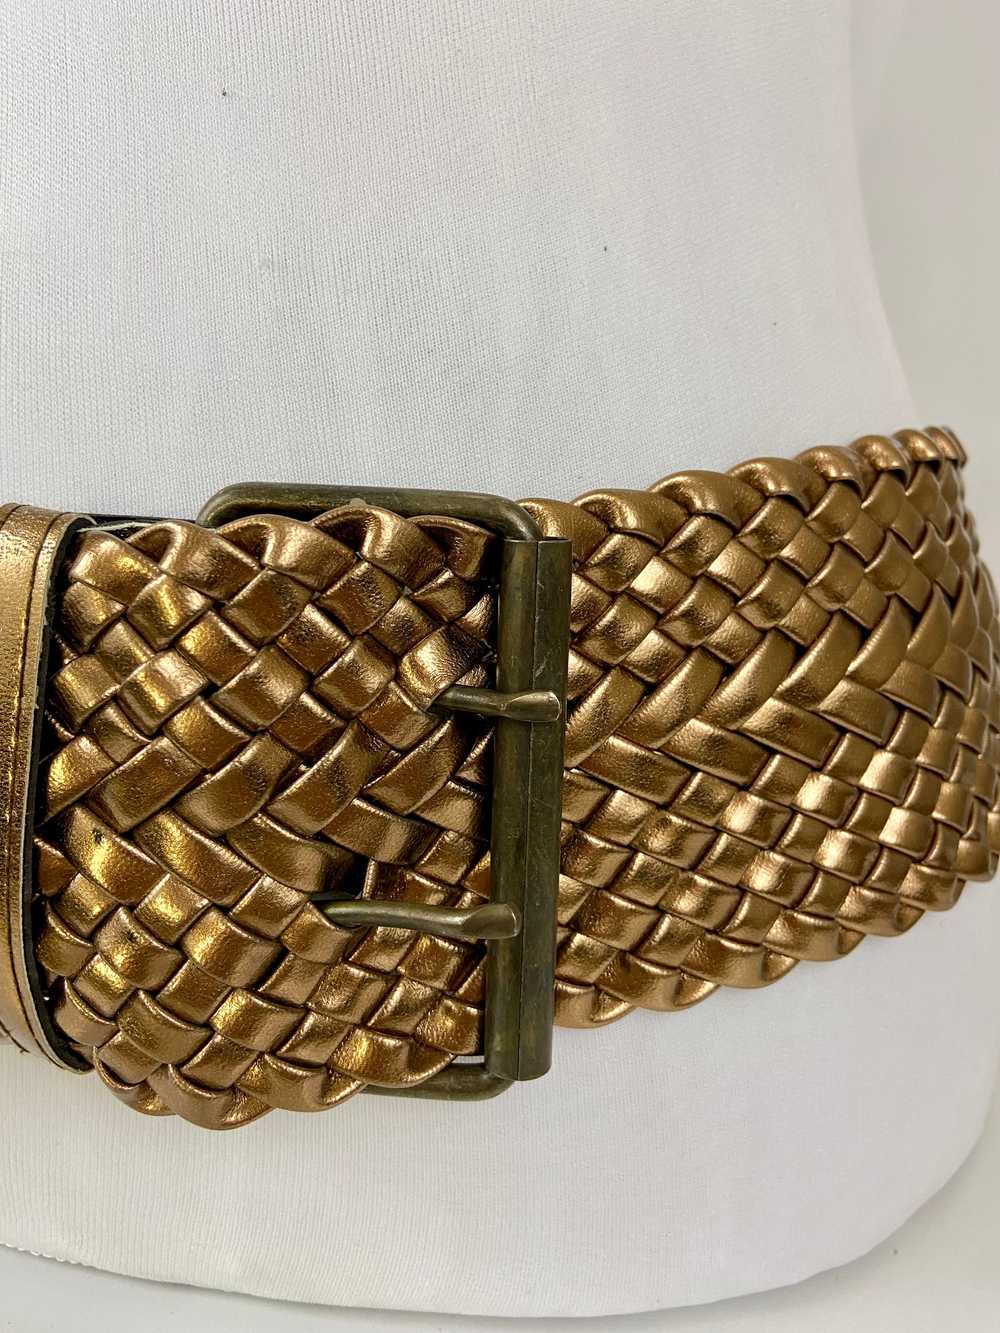 80's Vintage Woven Metallic Gold Braided
Belt - image 2